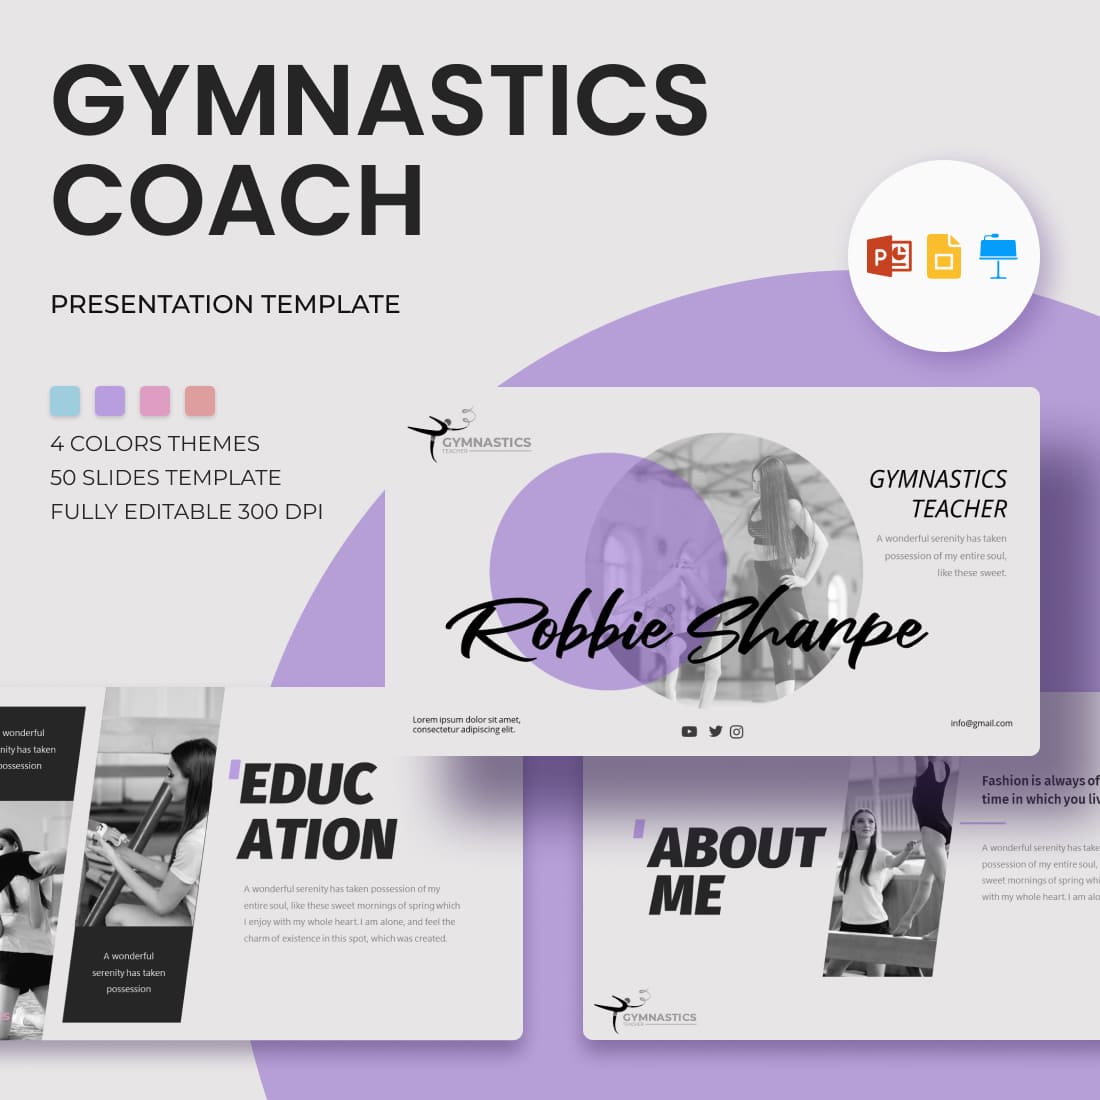 Gymnastics Teacher Presentation Template.